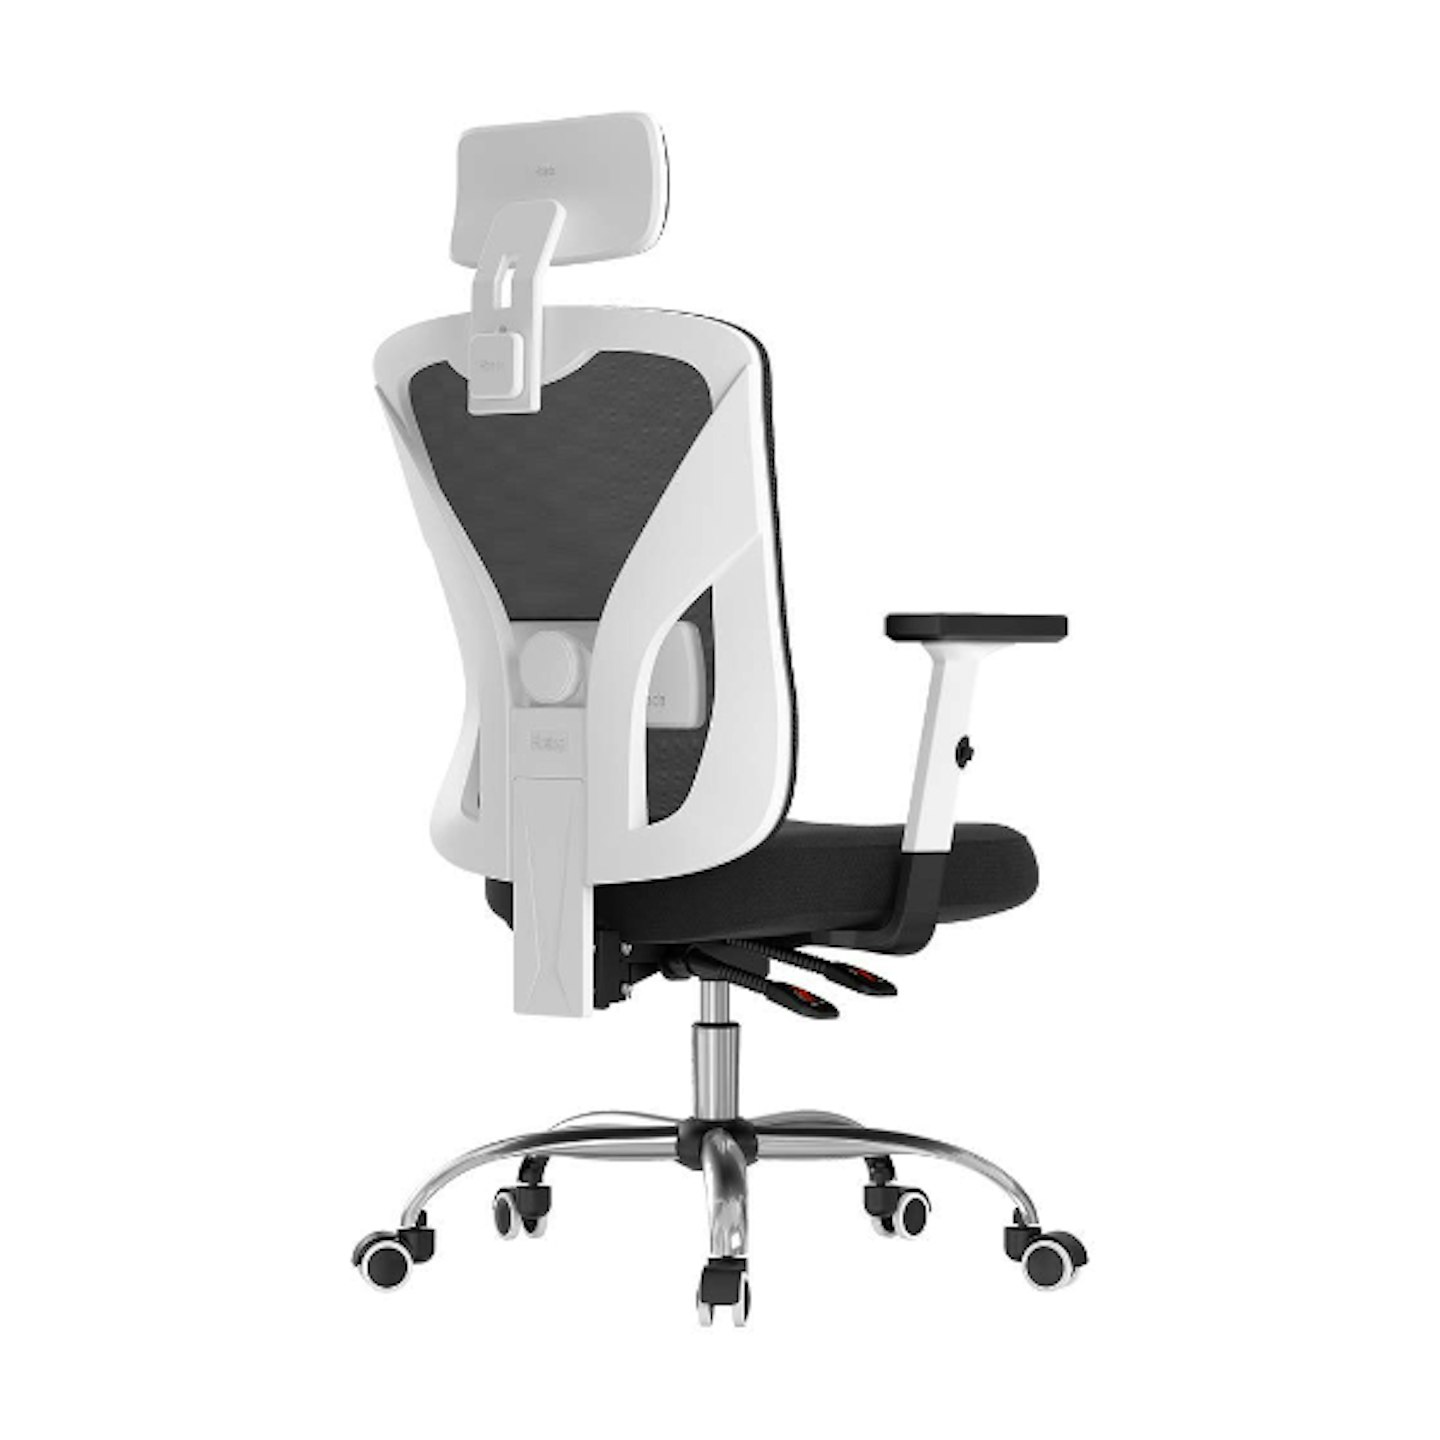 Hbada Ergonomic Office Chair with Lumbar Support